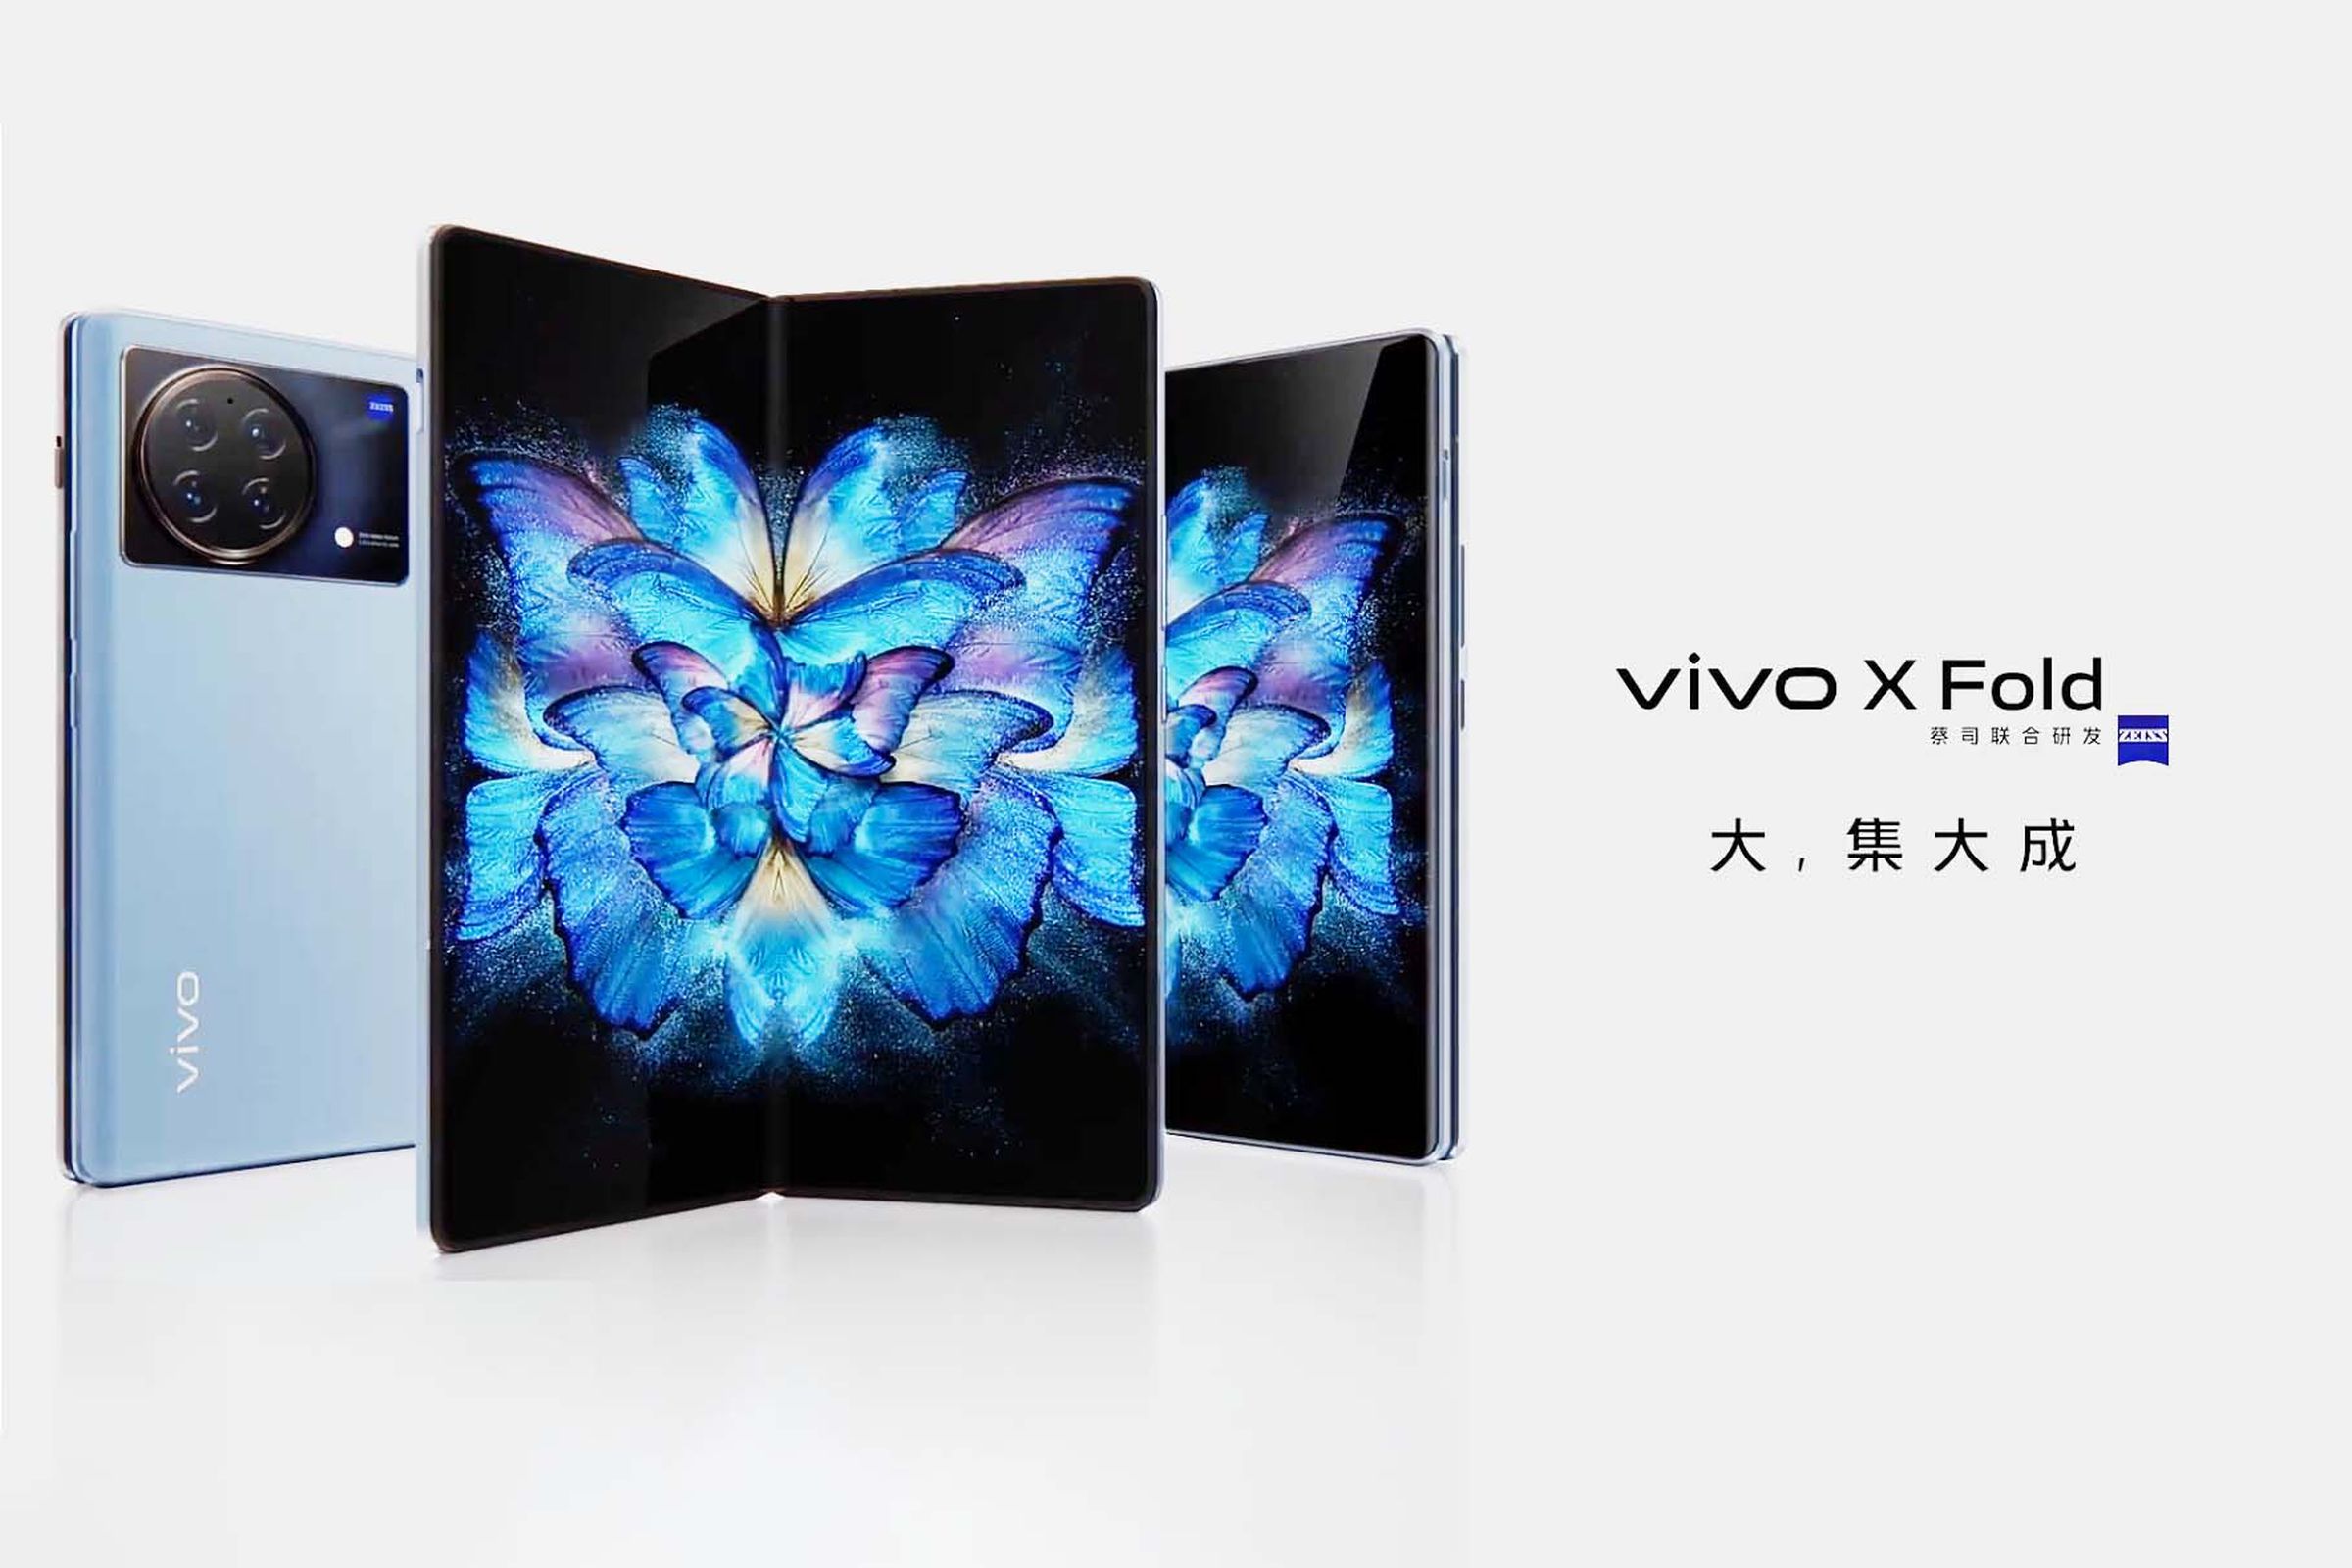 The Vivo X Fold.